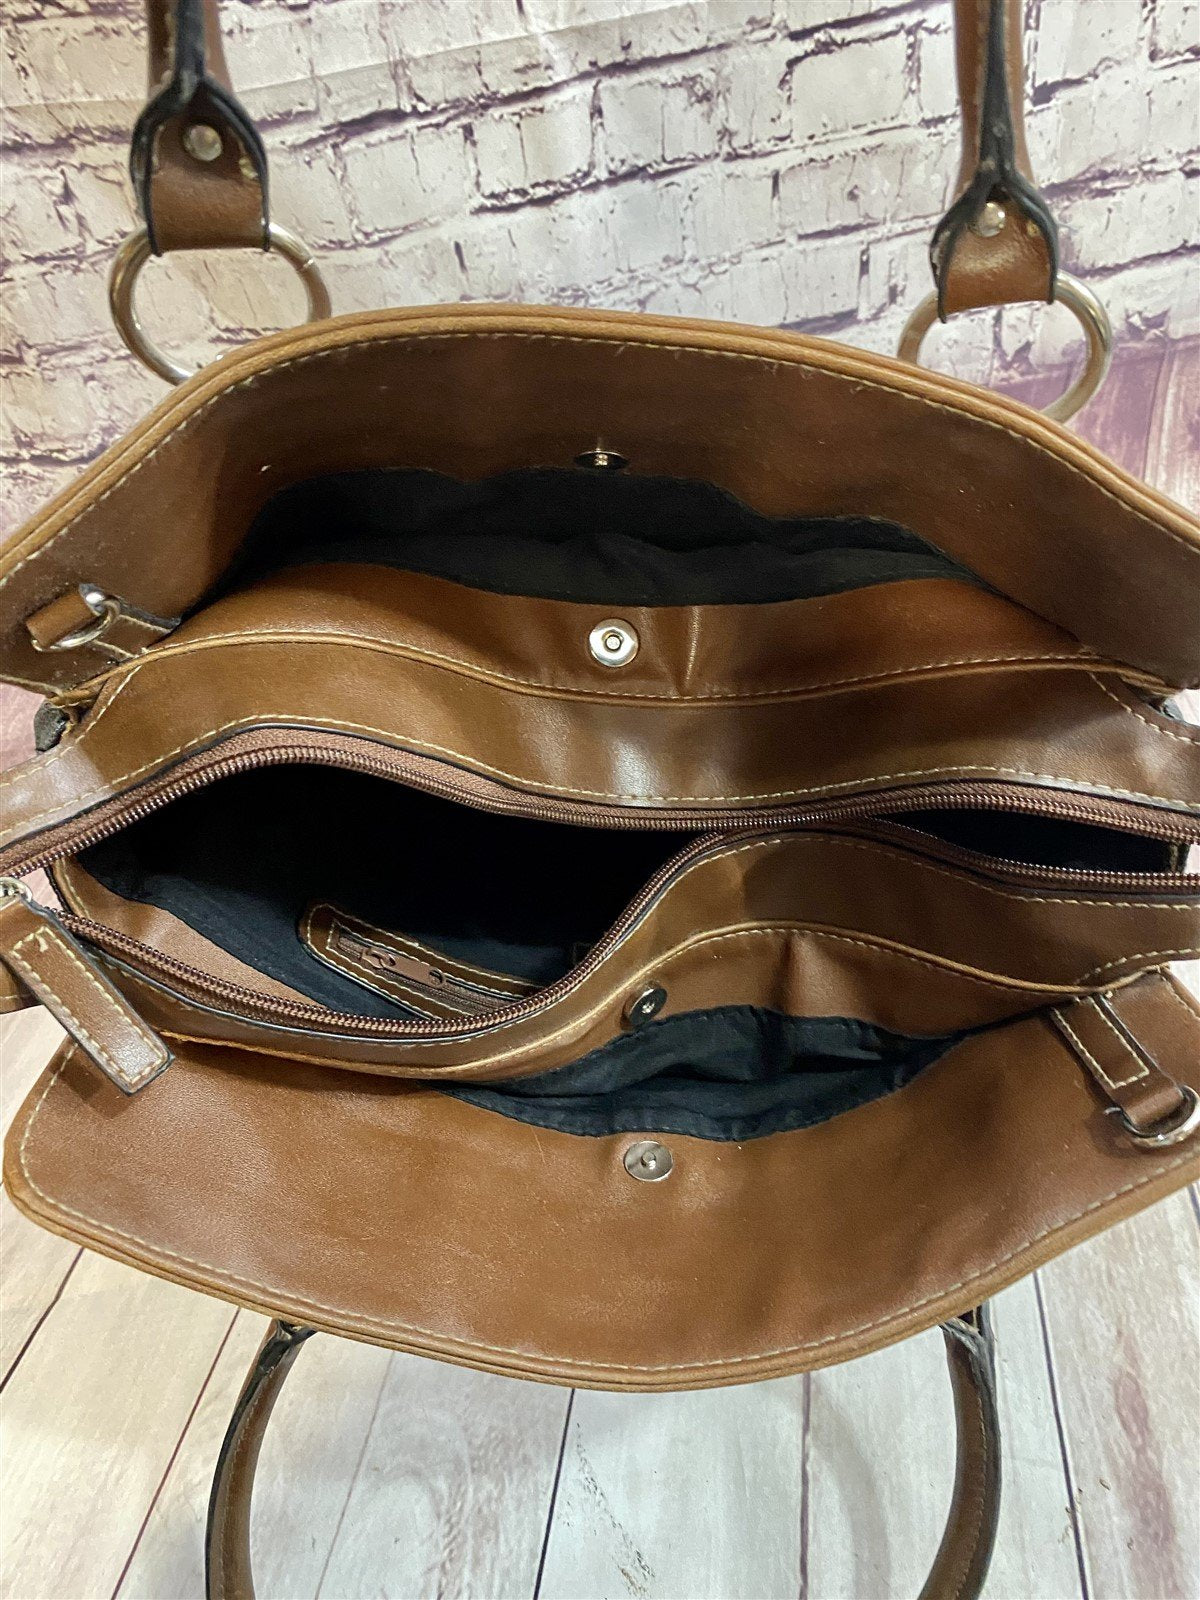 handbags for women large designer ladies bag pocket purse leather -  Walmart.com